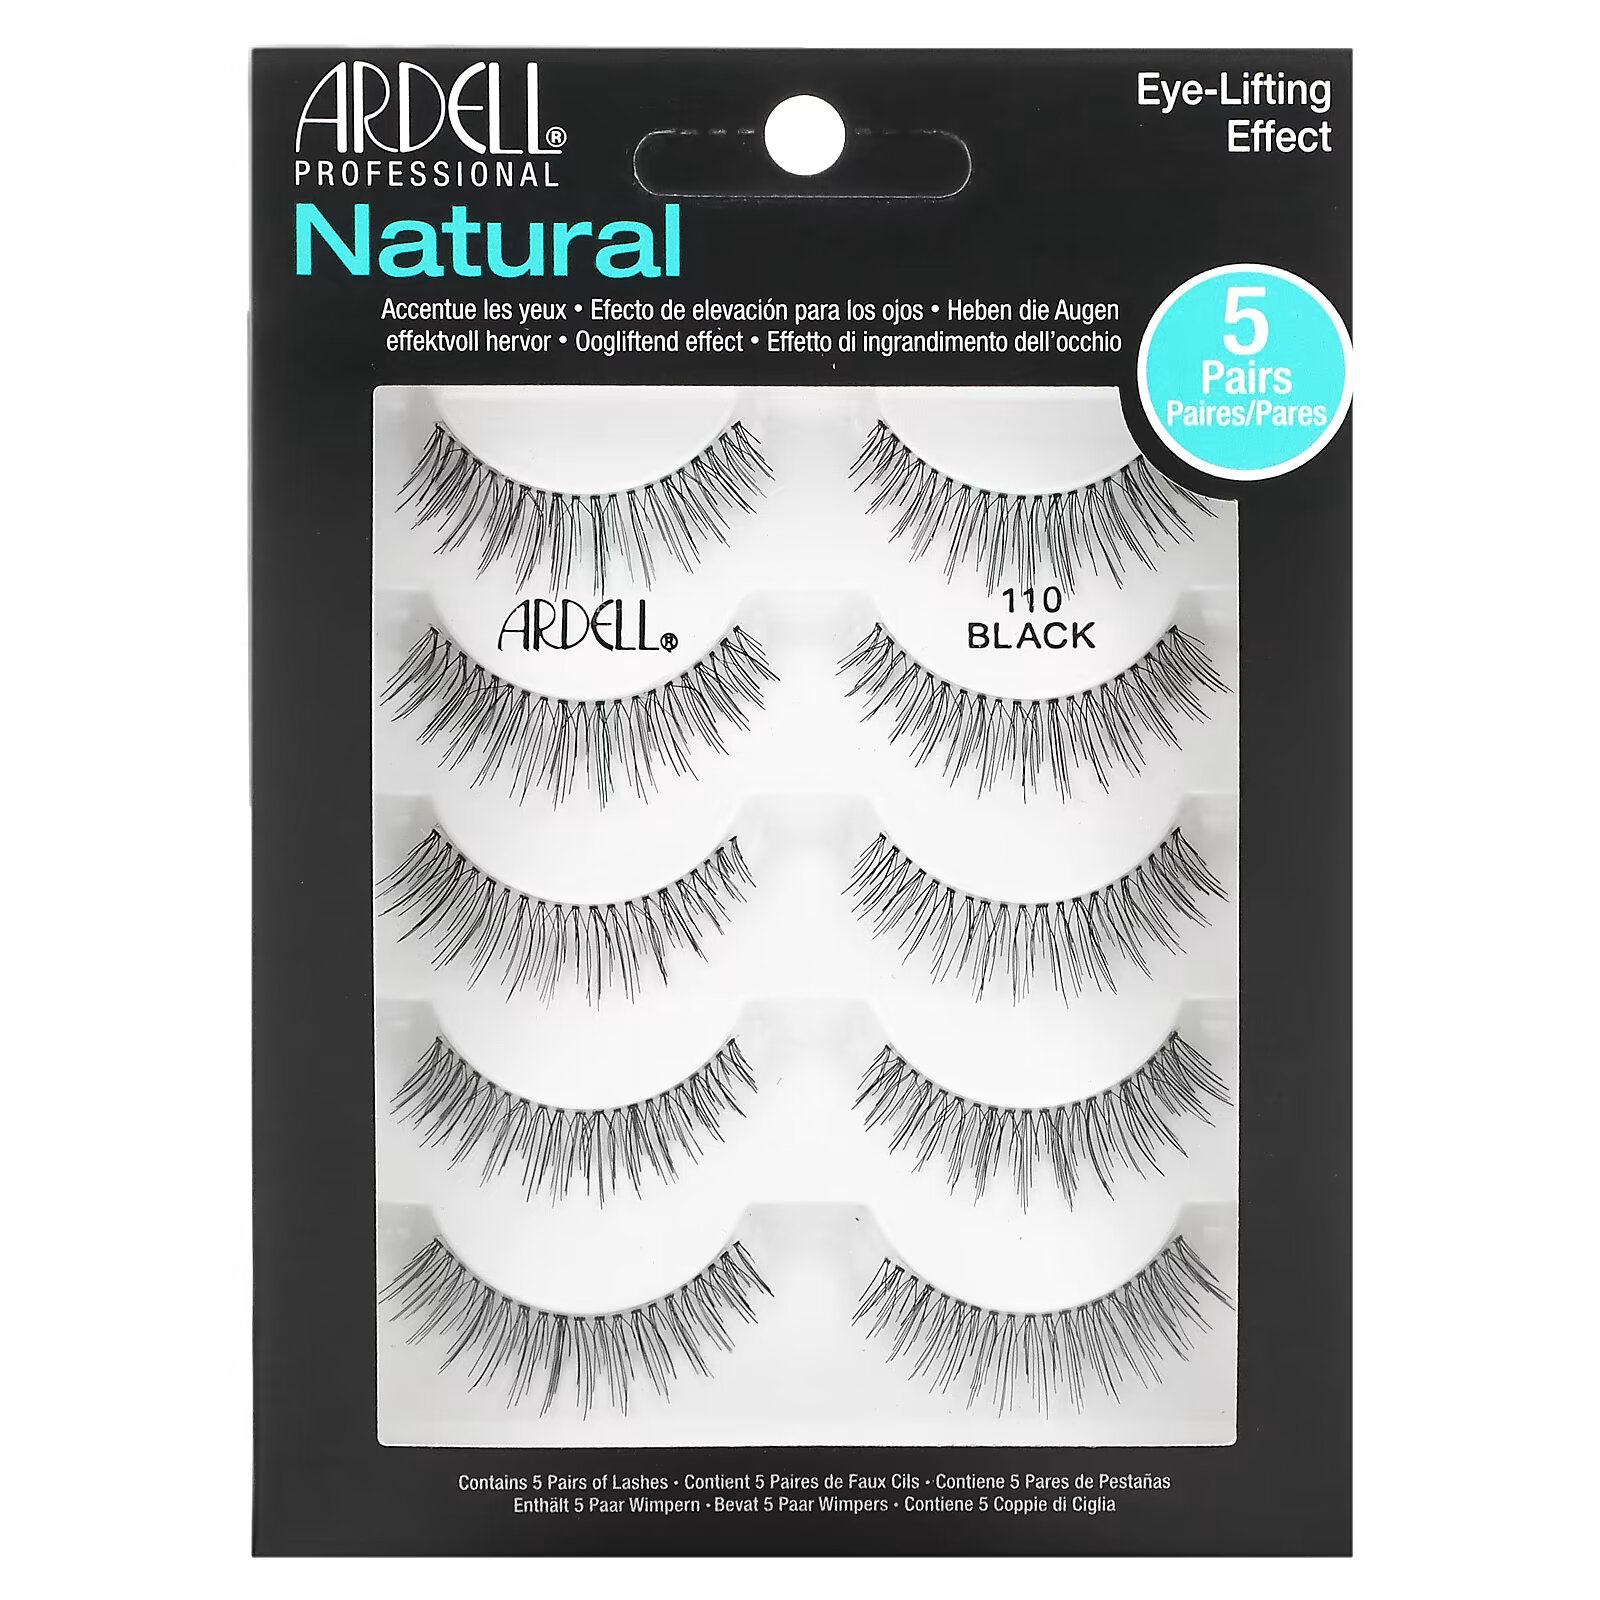 Ardell, Natural Lash, эффект лифтинга глаз, 5 пар ardell natural lash эффект лифтинга глаз 5 пар